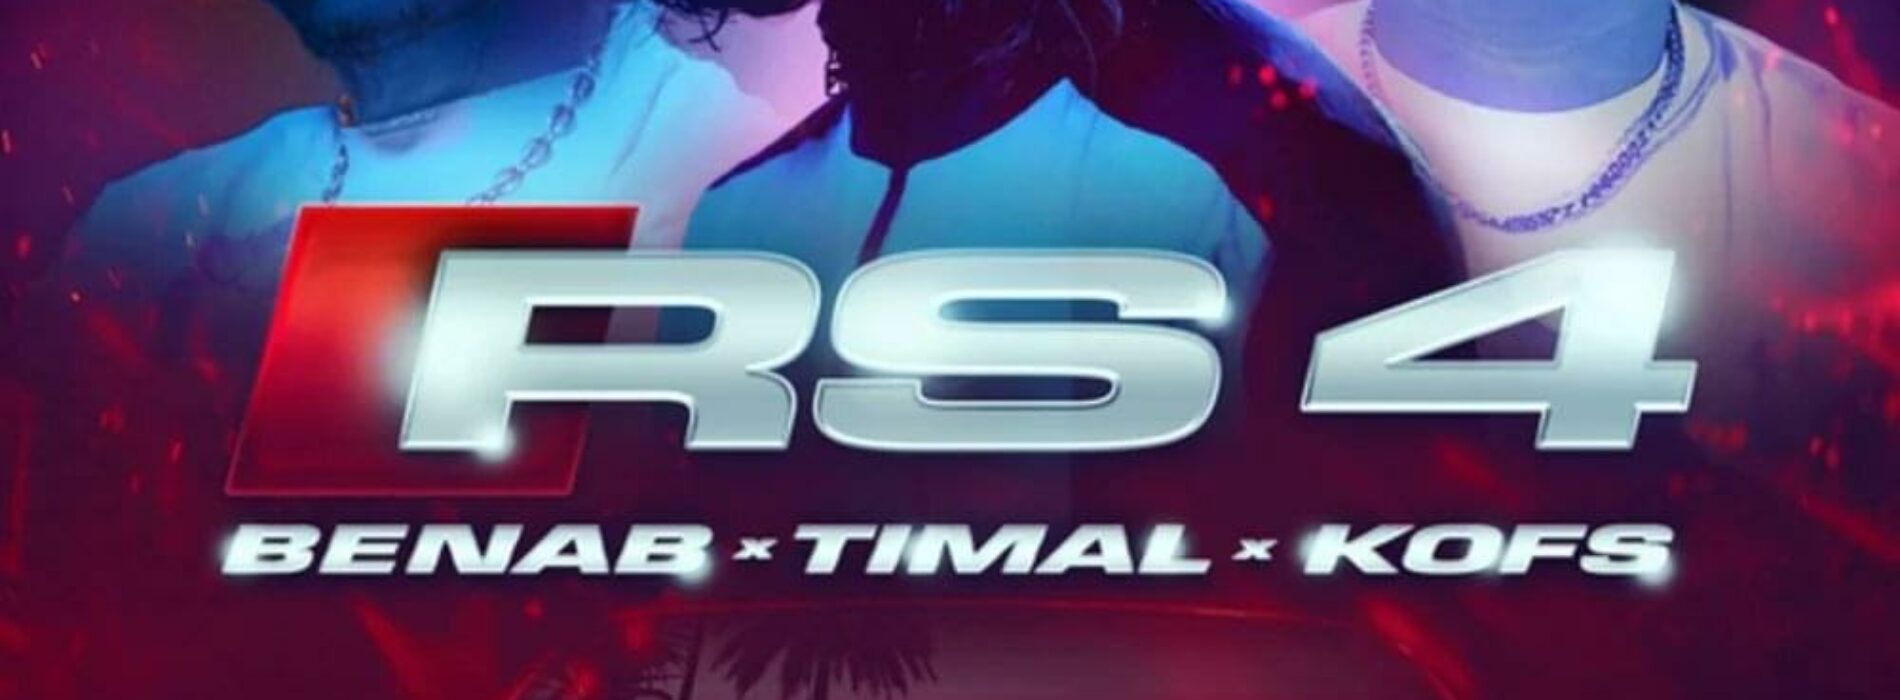 Benab – RS4 feat. Timal & Kofs (Clip officiel) – Août 2021